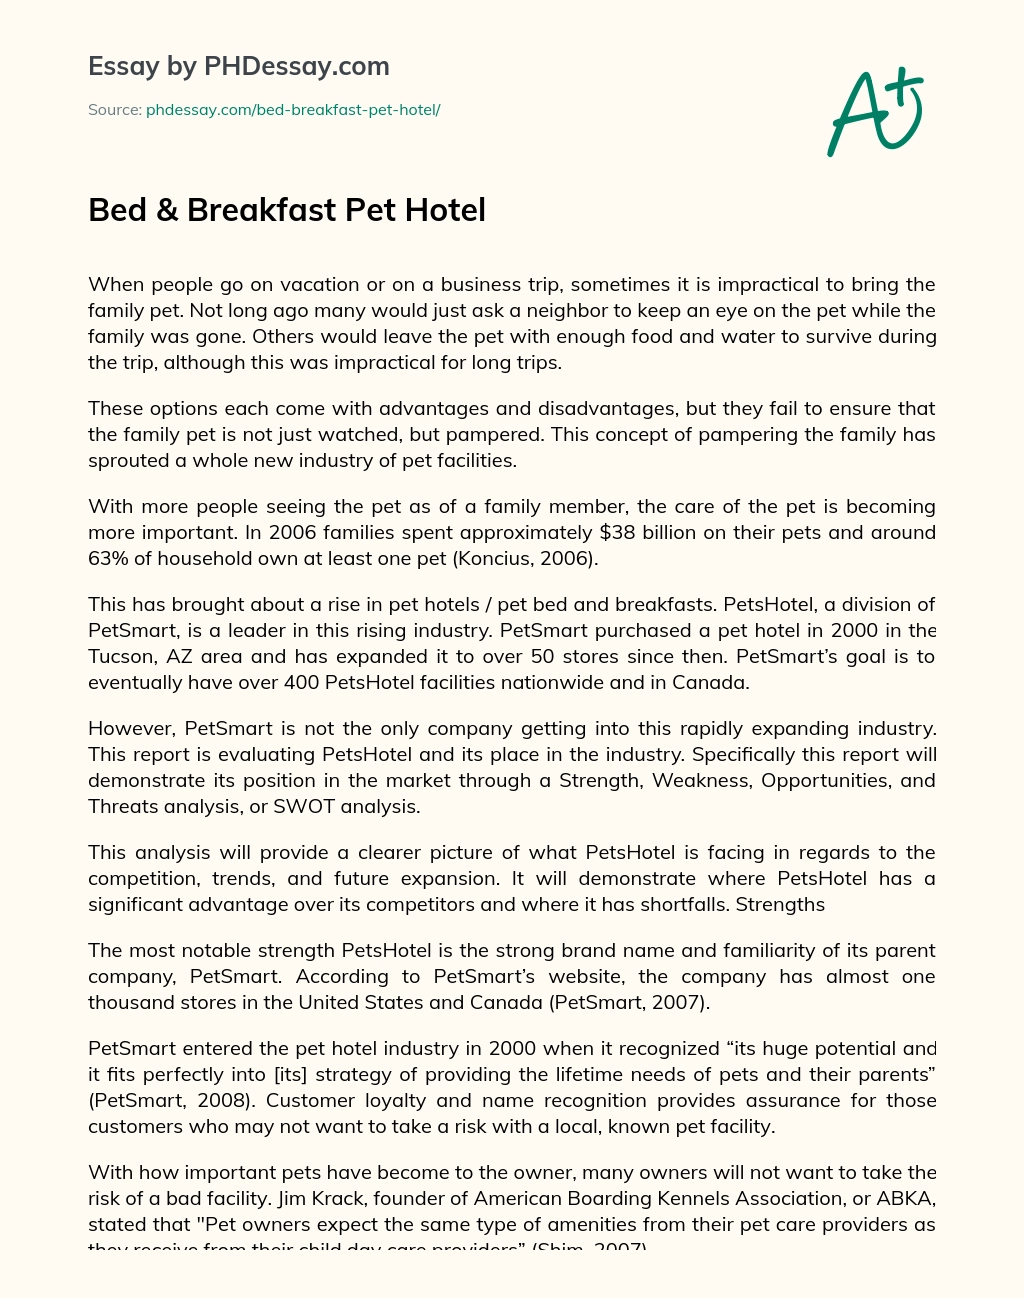 Bed & Breakfast Pet Hotel essay